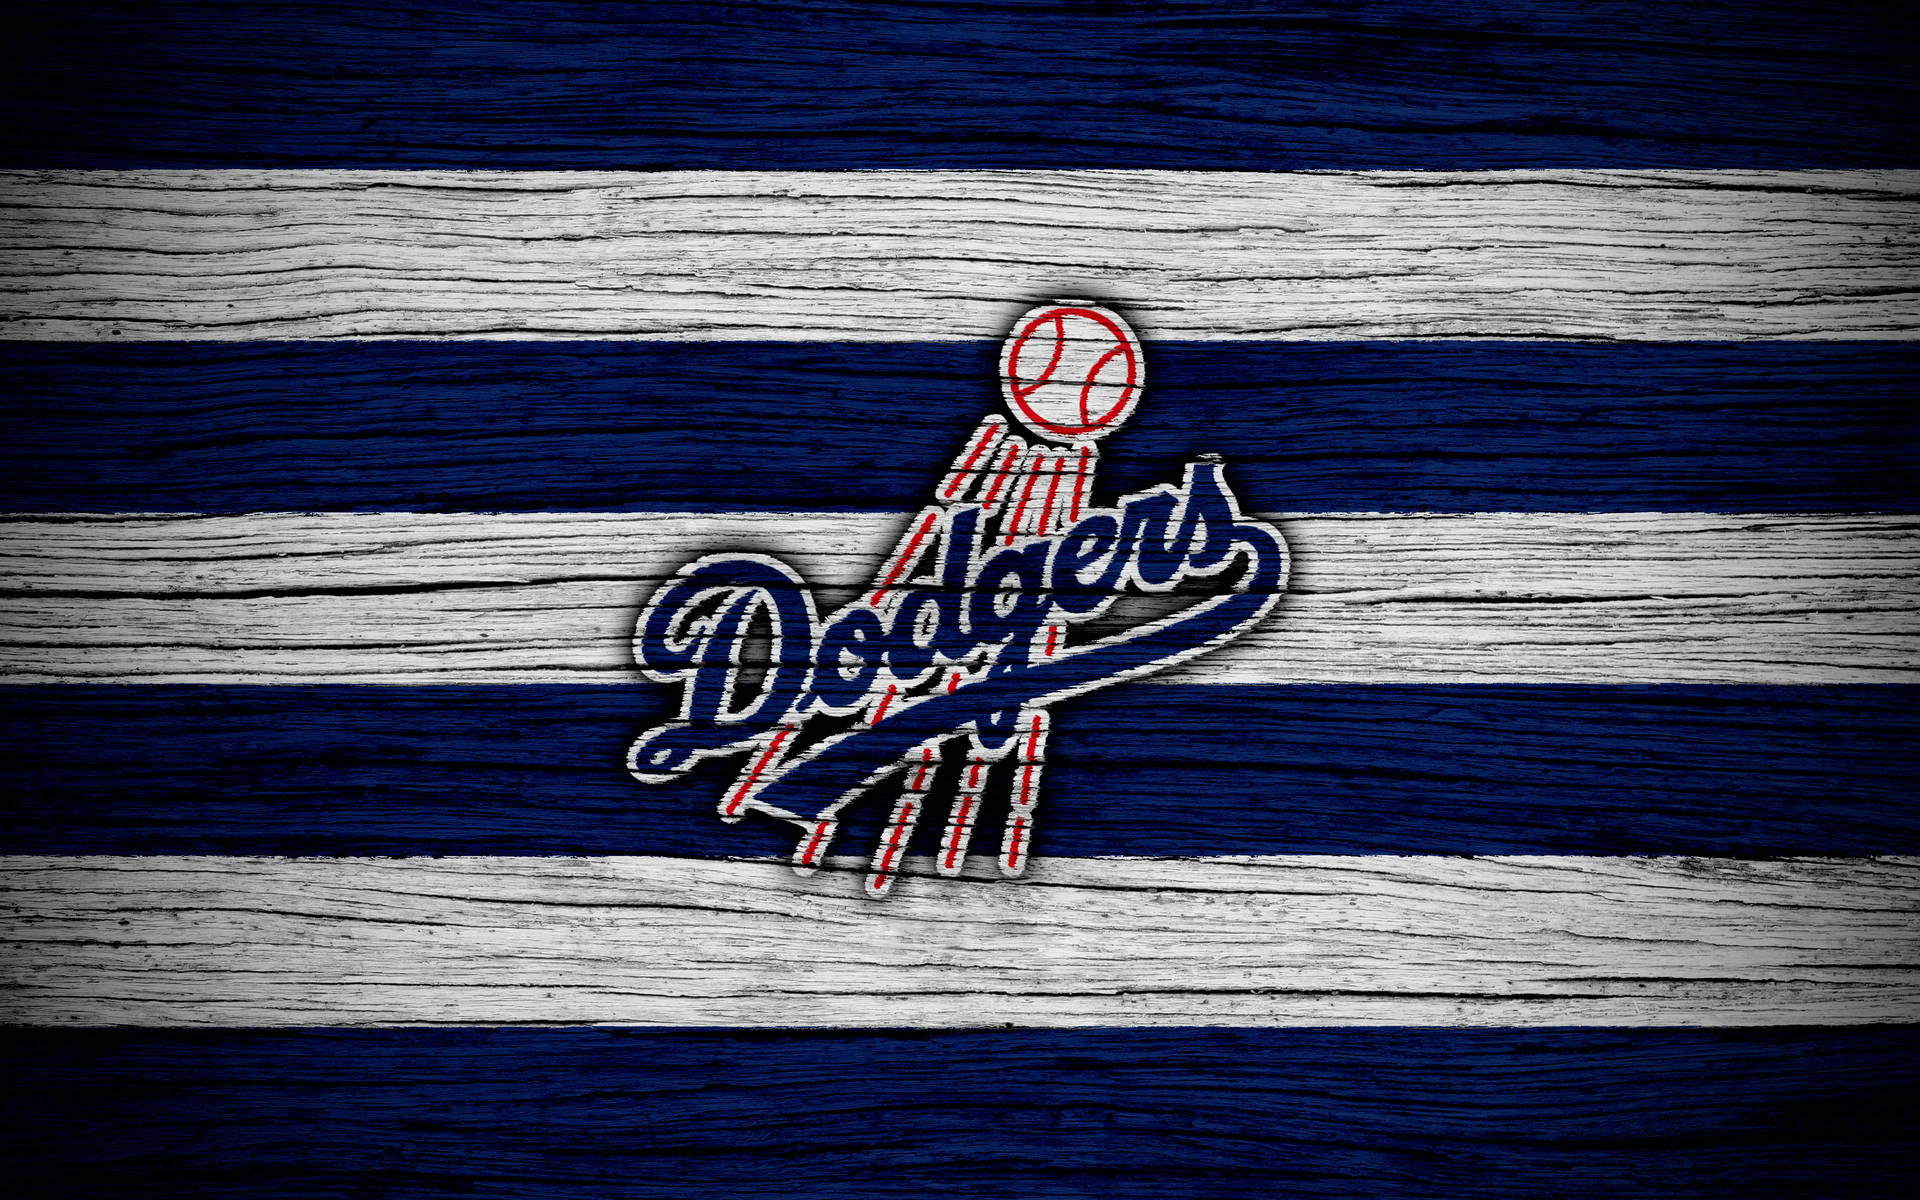 Los Angeles Dodgers Wooden Design Background